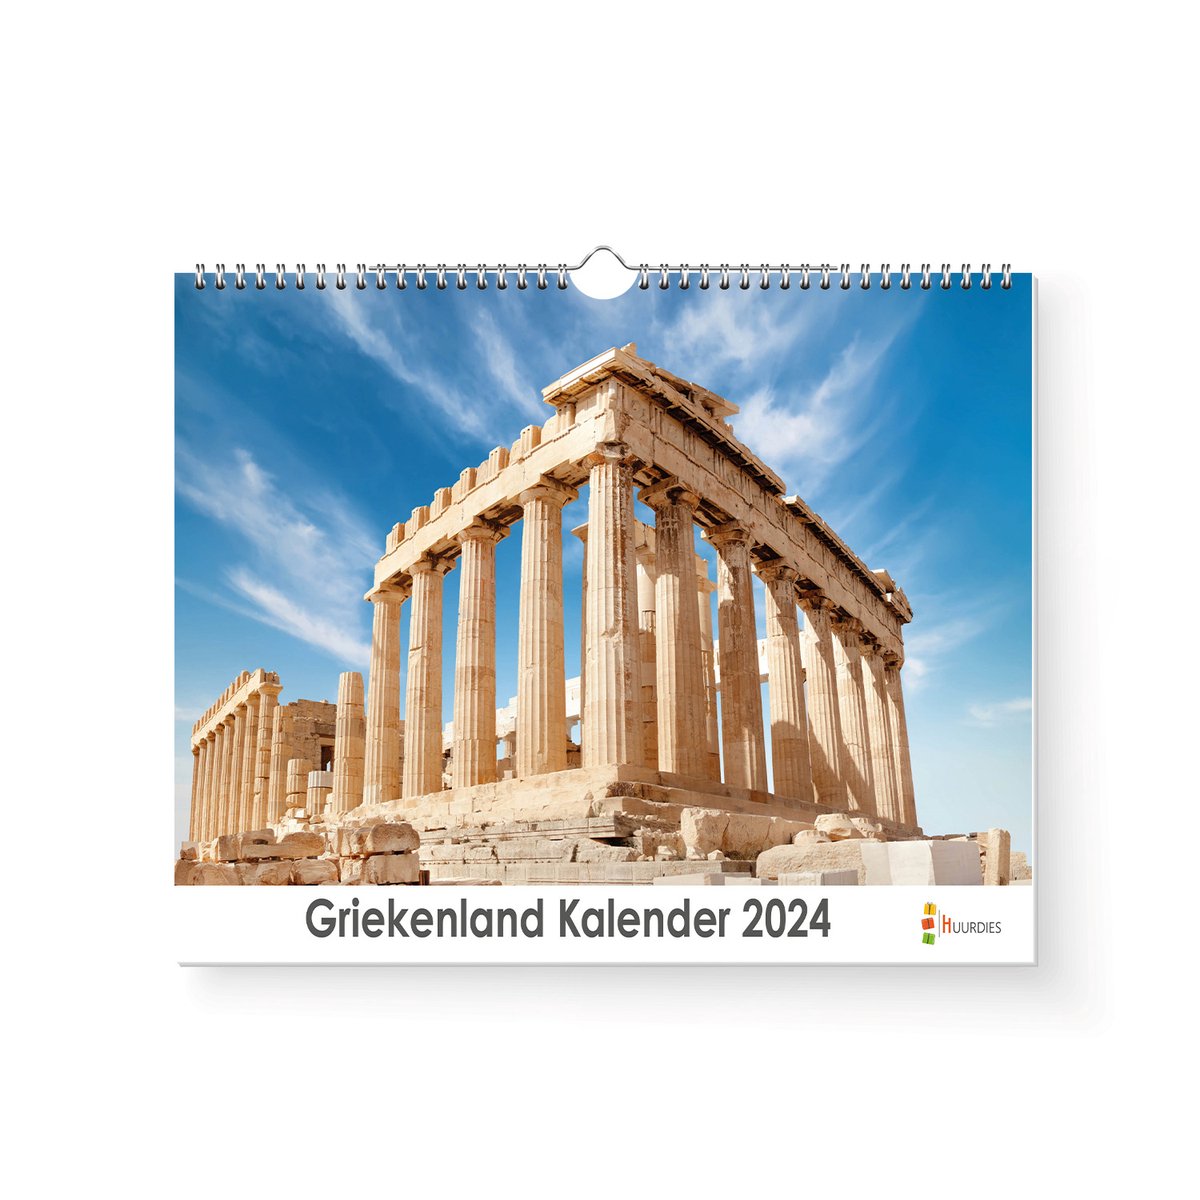 Huurdies - Griekenland Kalender - Jaarkalender 2024 - 35x24 - 300gms